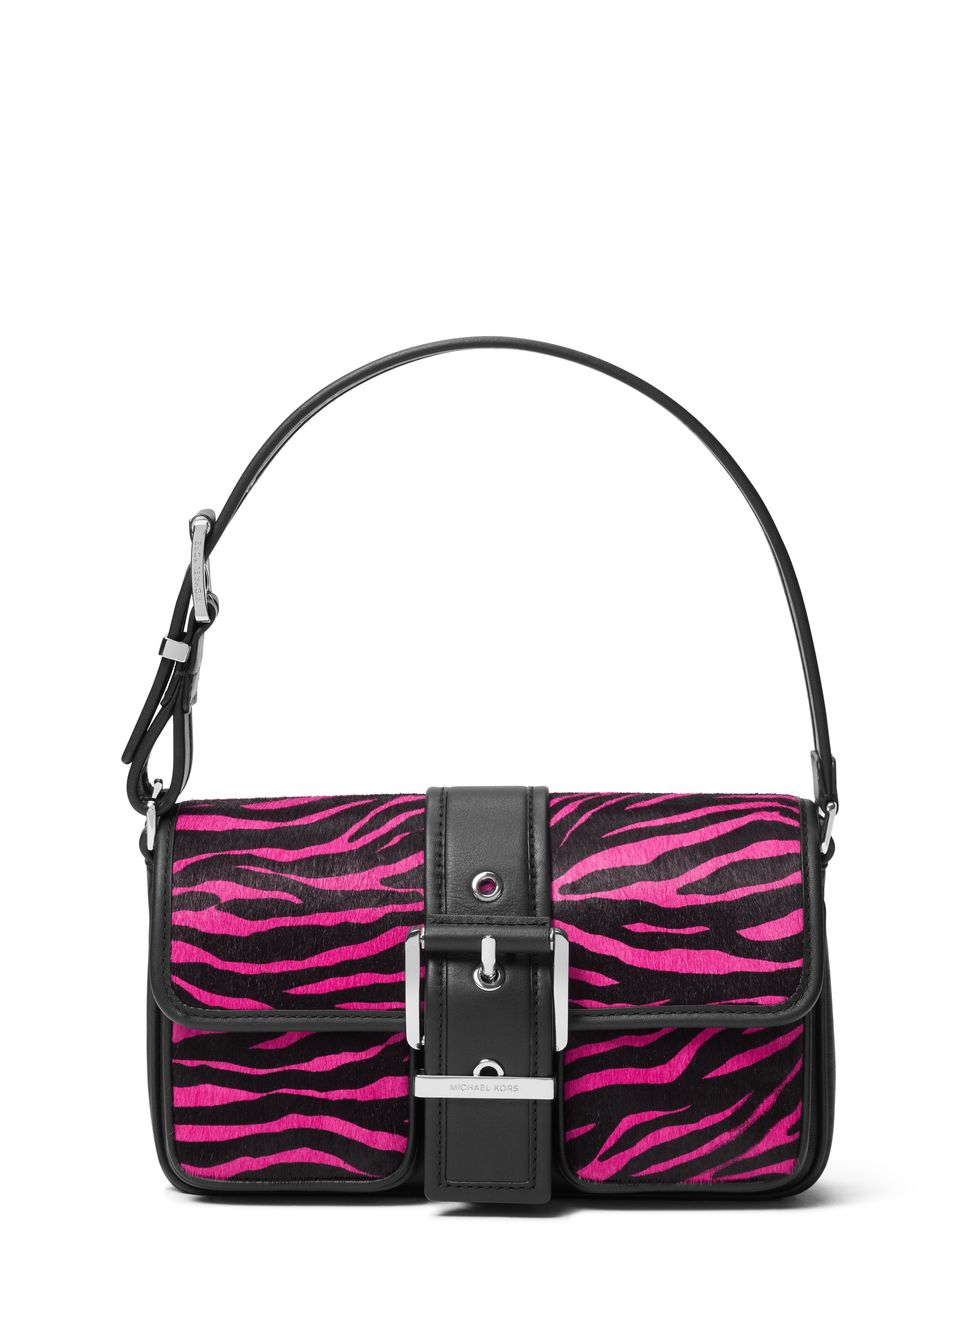 a purple and black handbag